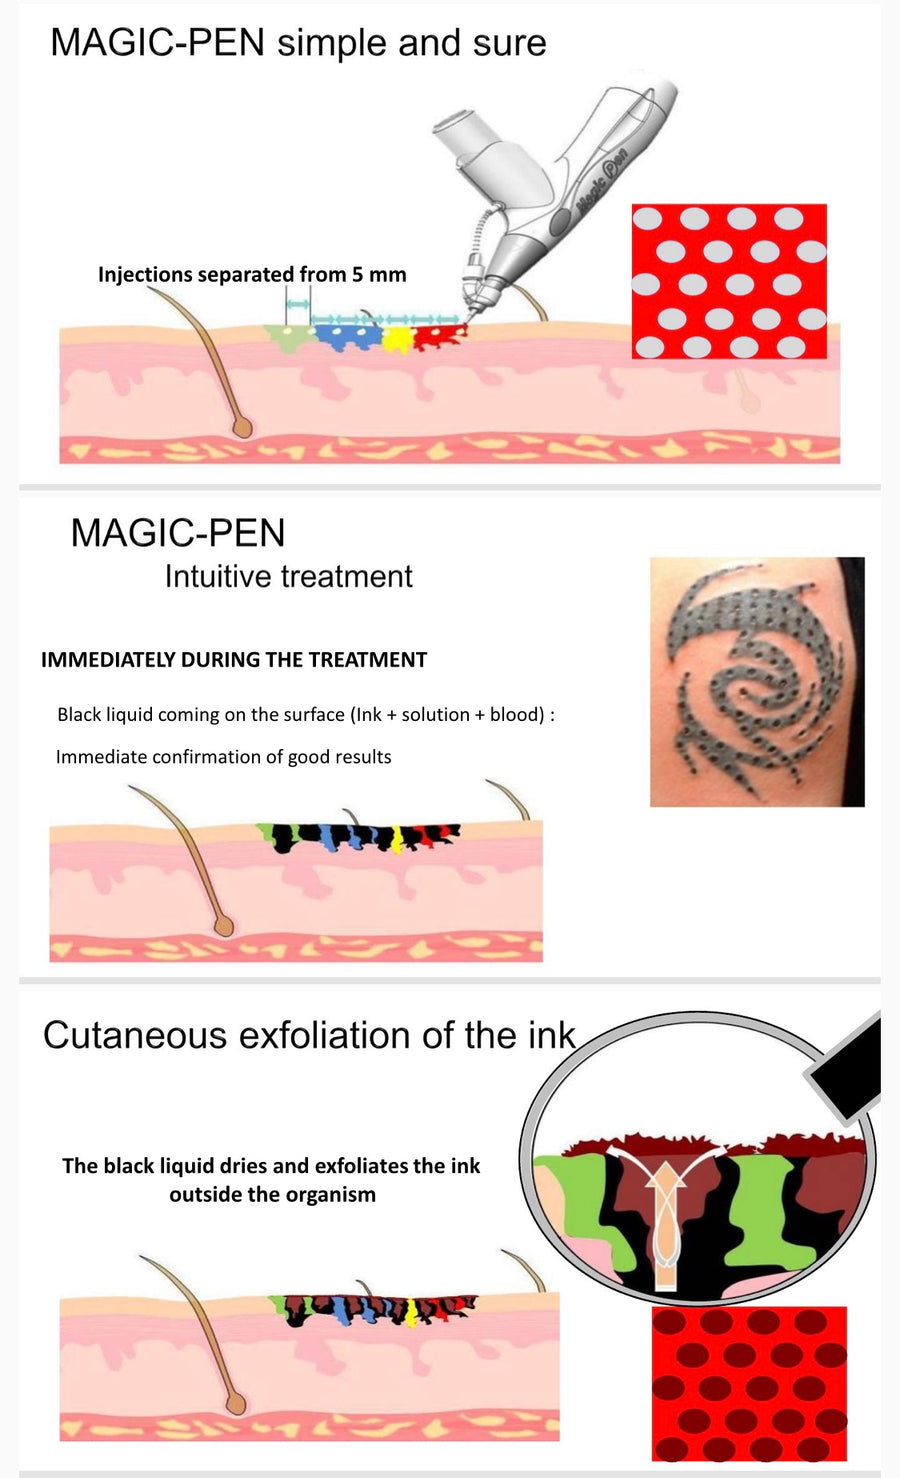 Professional Laser Picosecond Pen Tattoo Removal Laser Pen Blue&Red LED  Light Freckle Acne Mole Dark Spot Pigment Beauty Machine - AliExpress